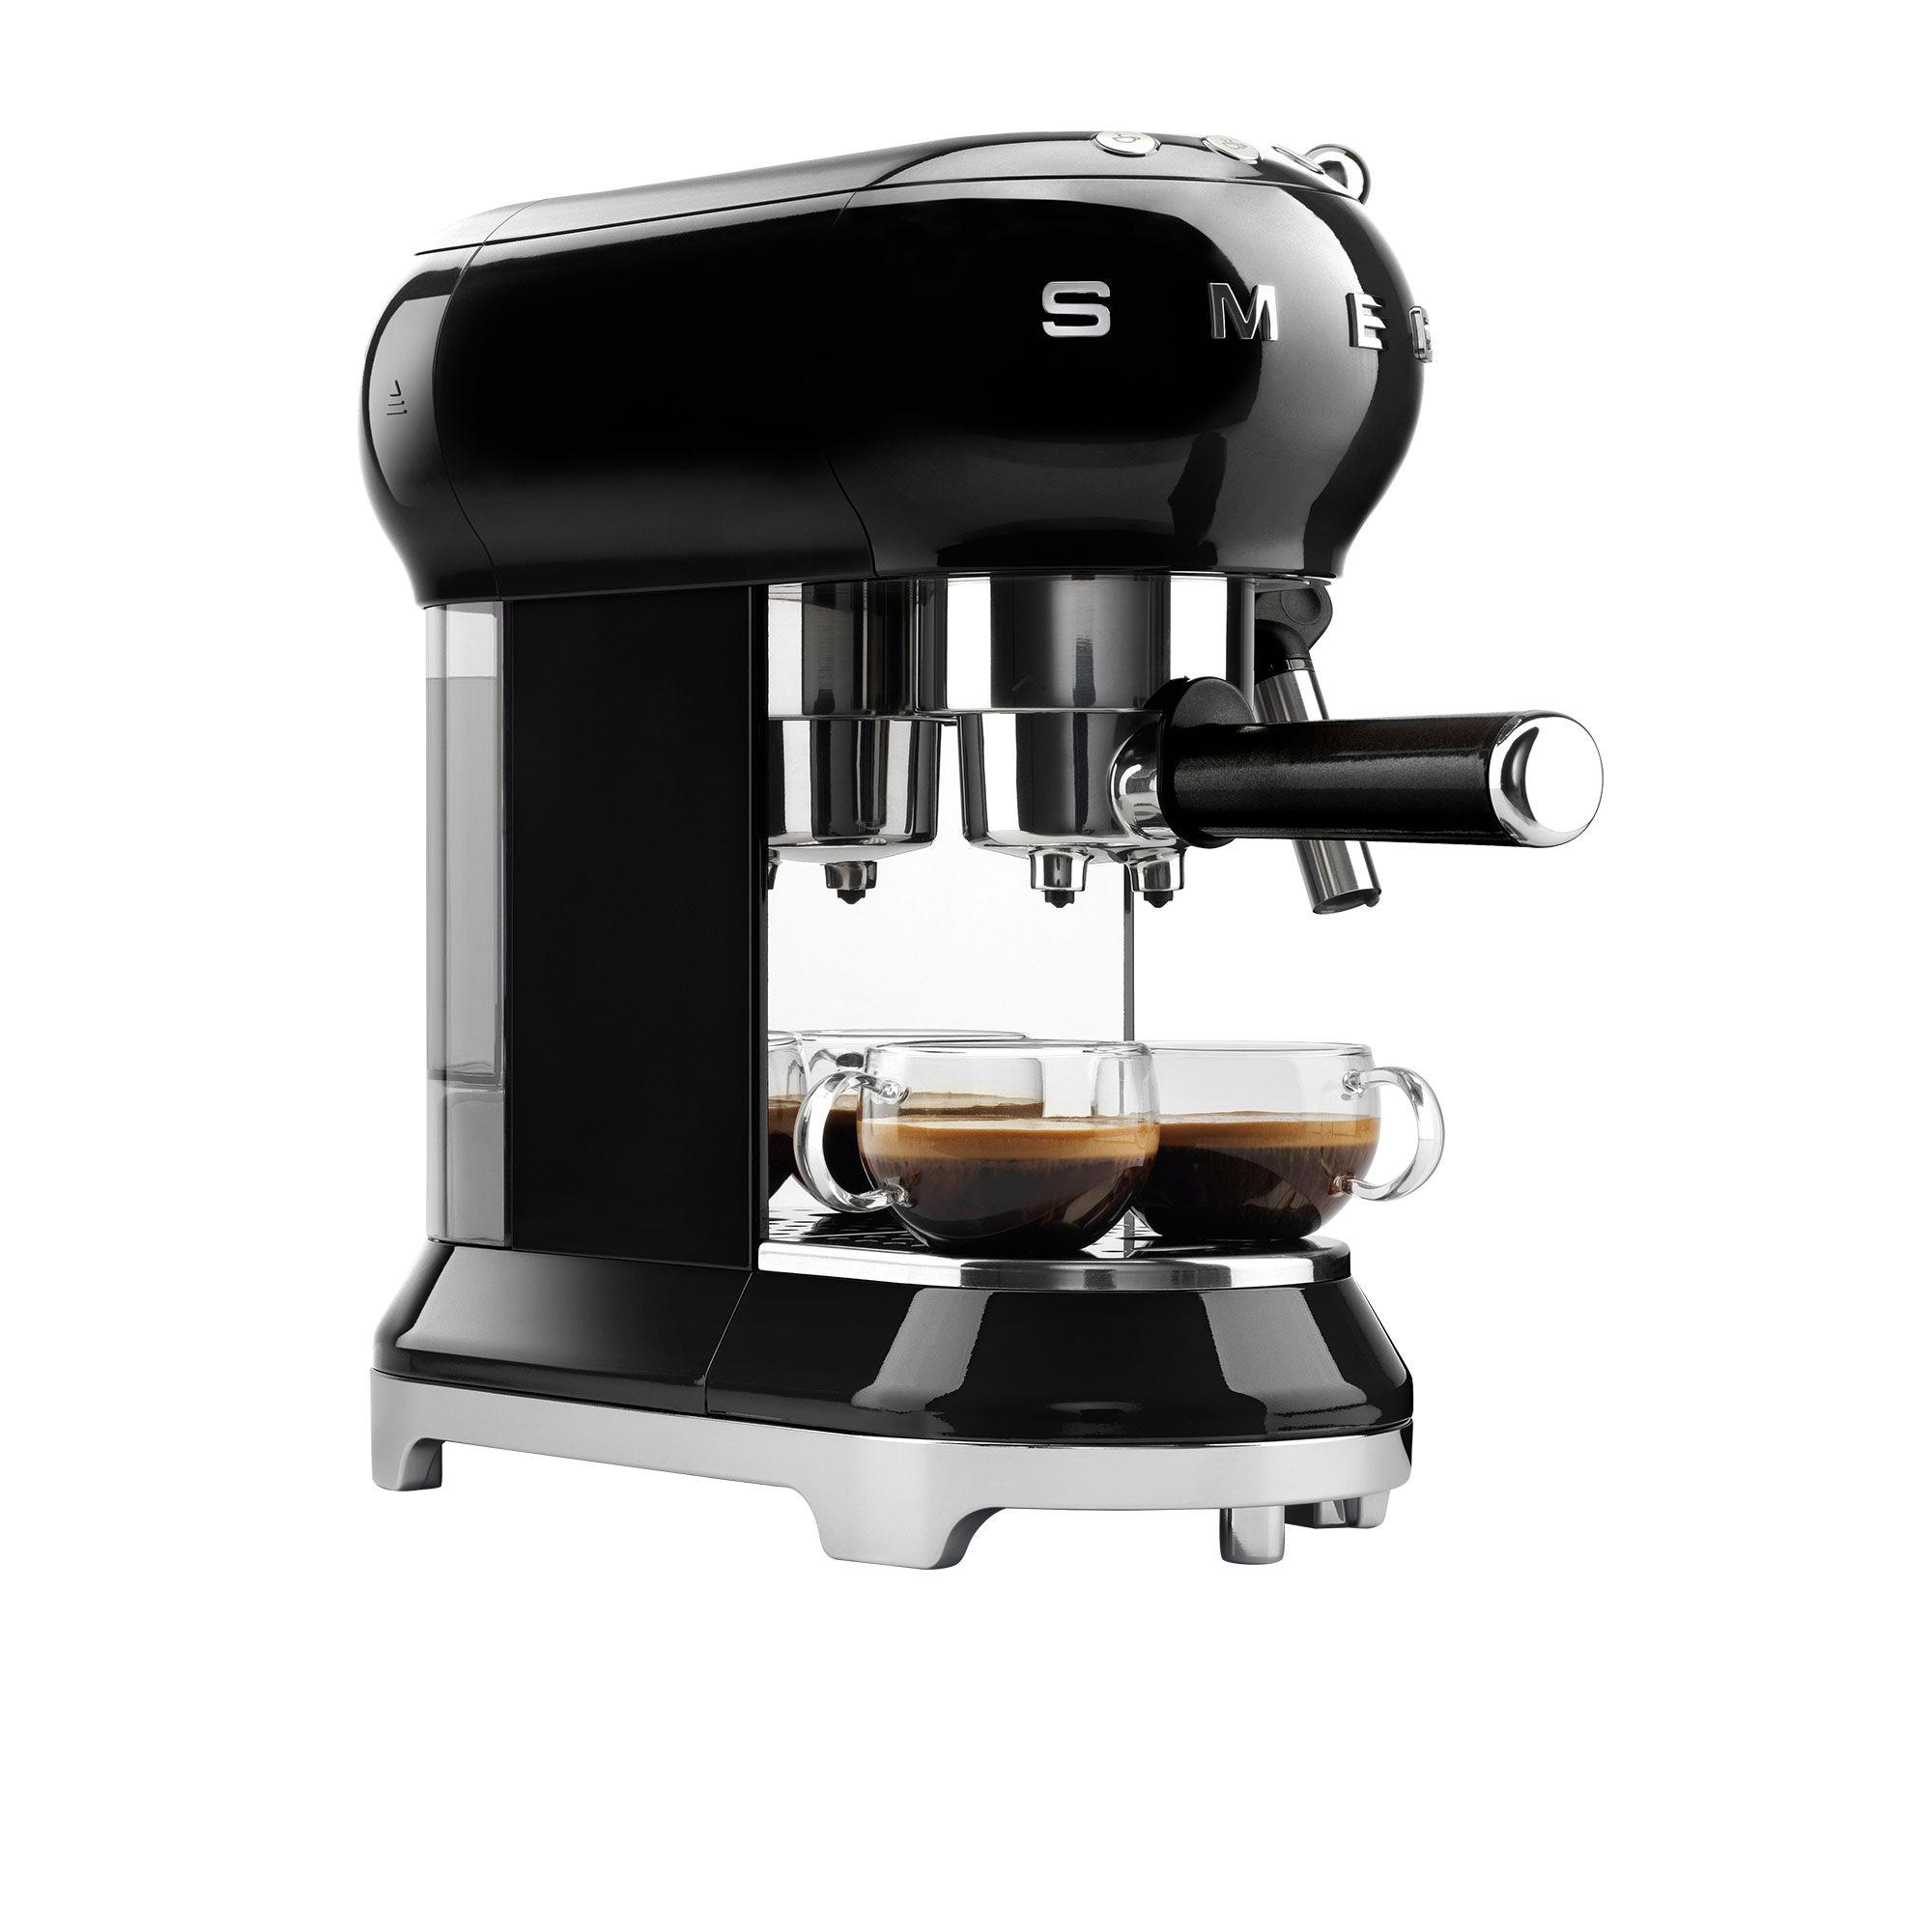 Smeg 50's Retro Style Espresso Coffee Machine Black Image 3